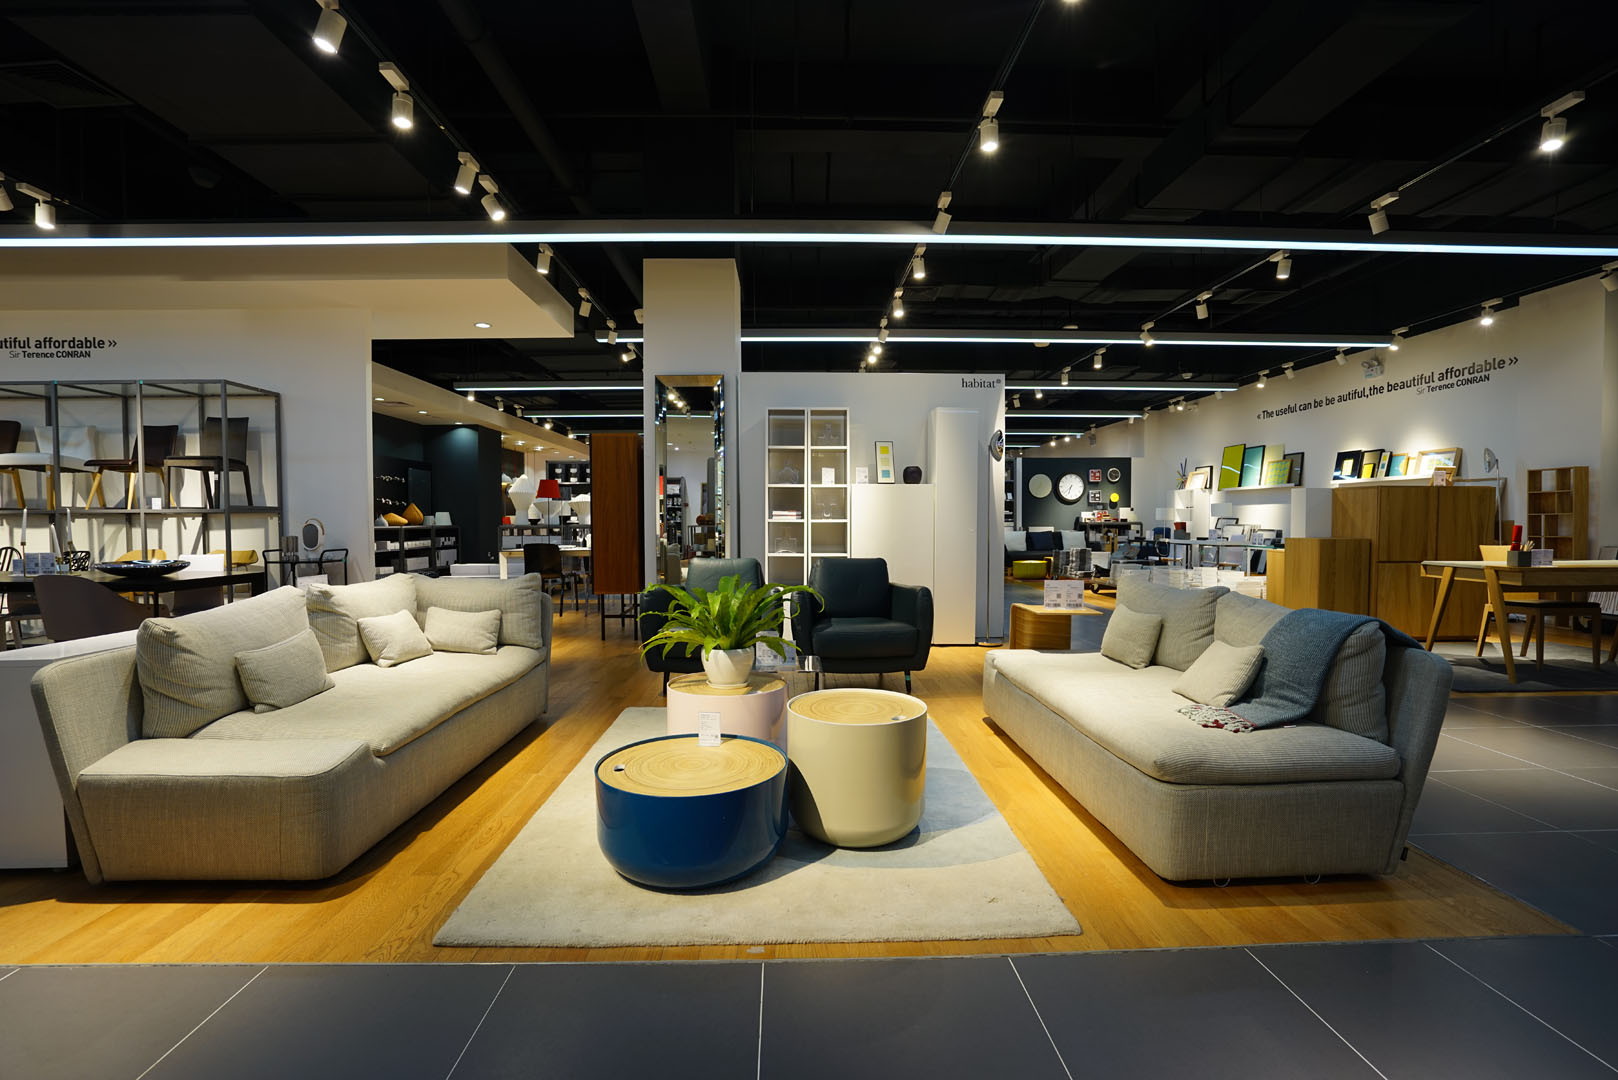 LED interior lighting in furniture stores